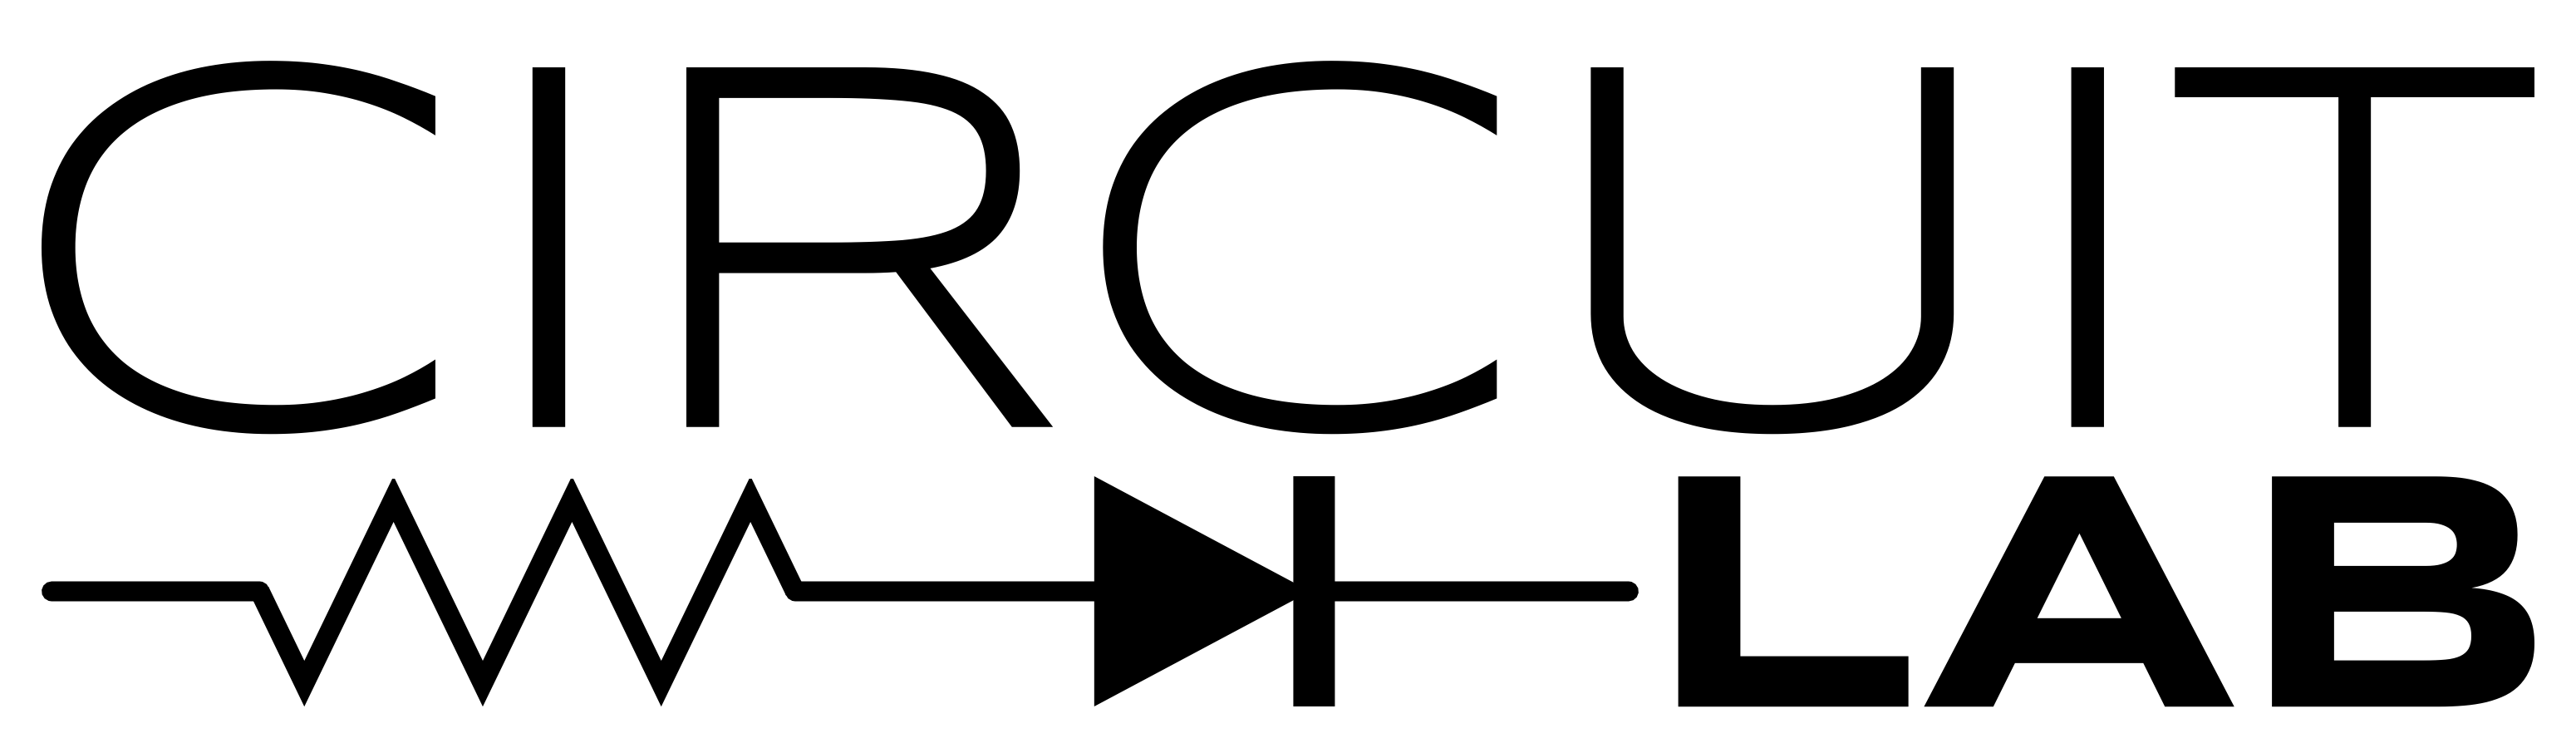 circuitlab logo